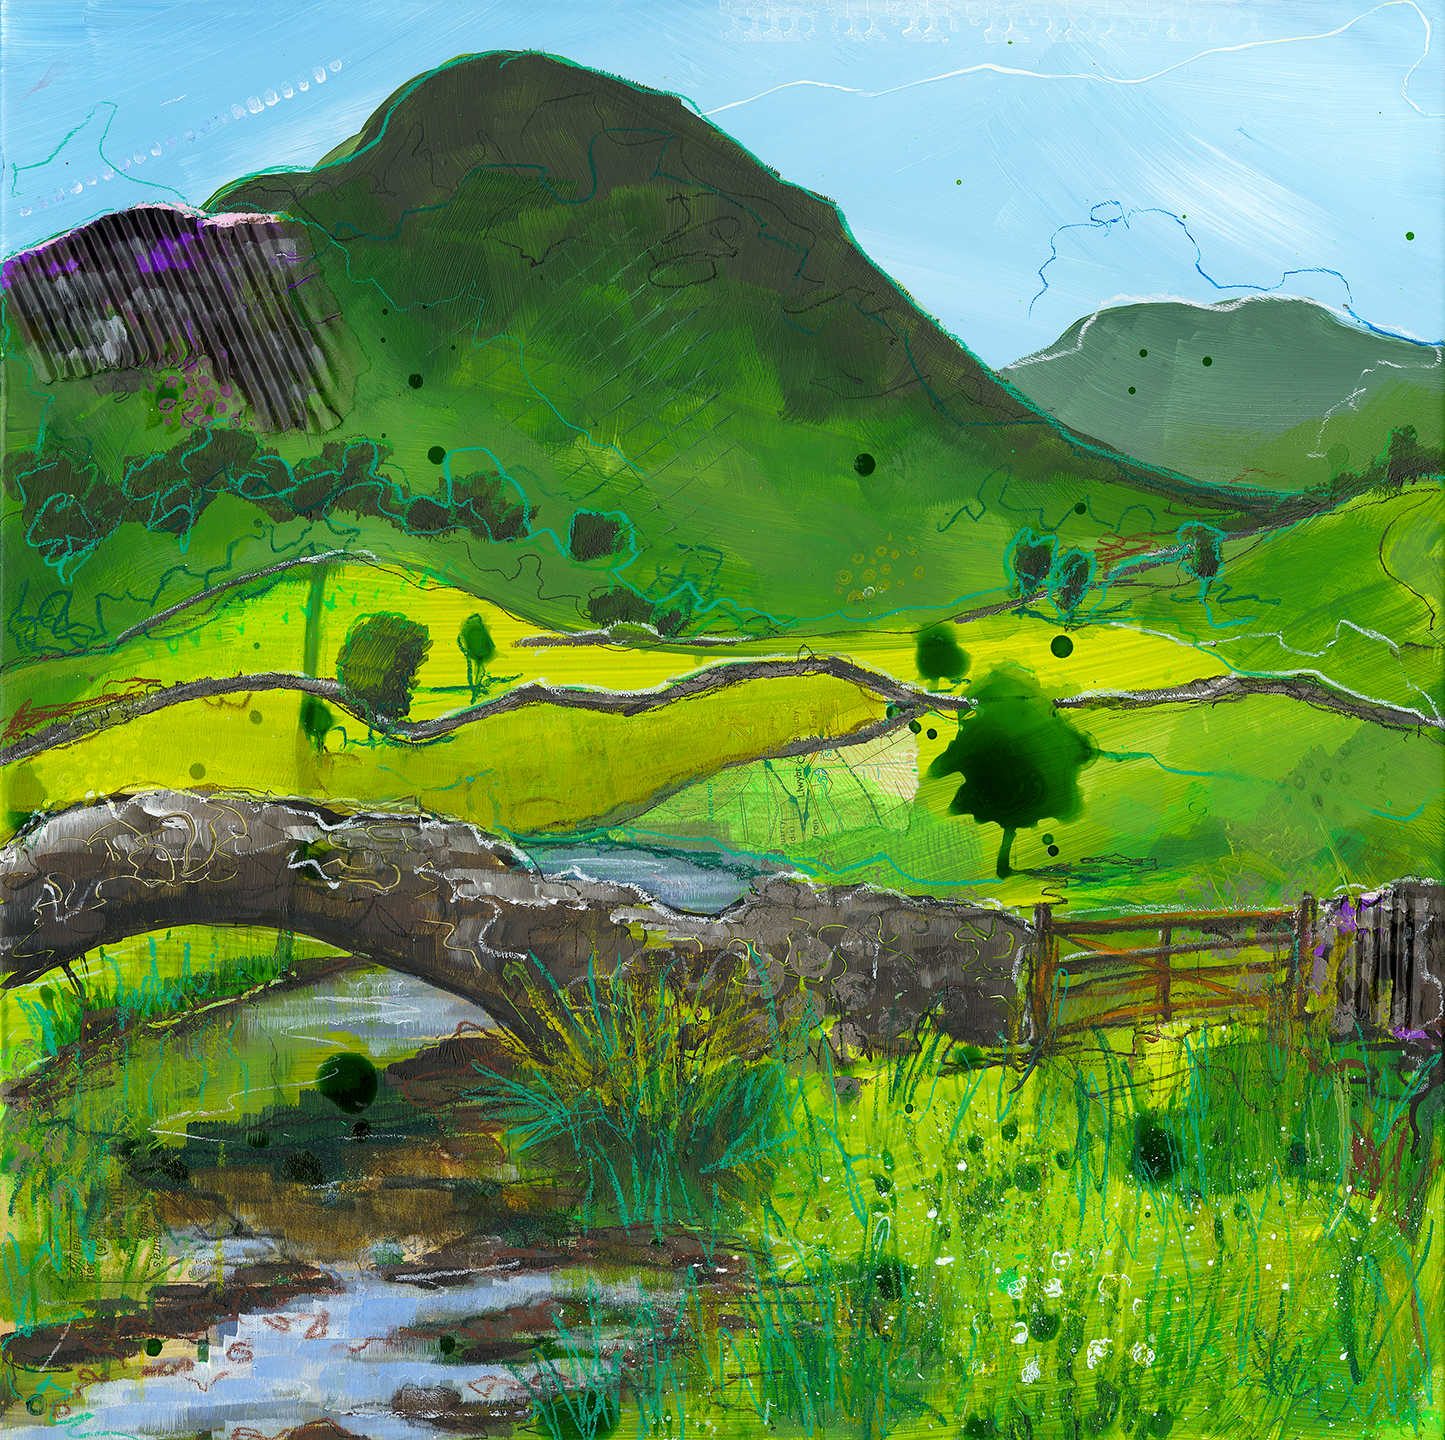 'Countryside Landscape: Quaint Bridge' [Original Painting]